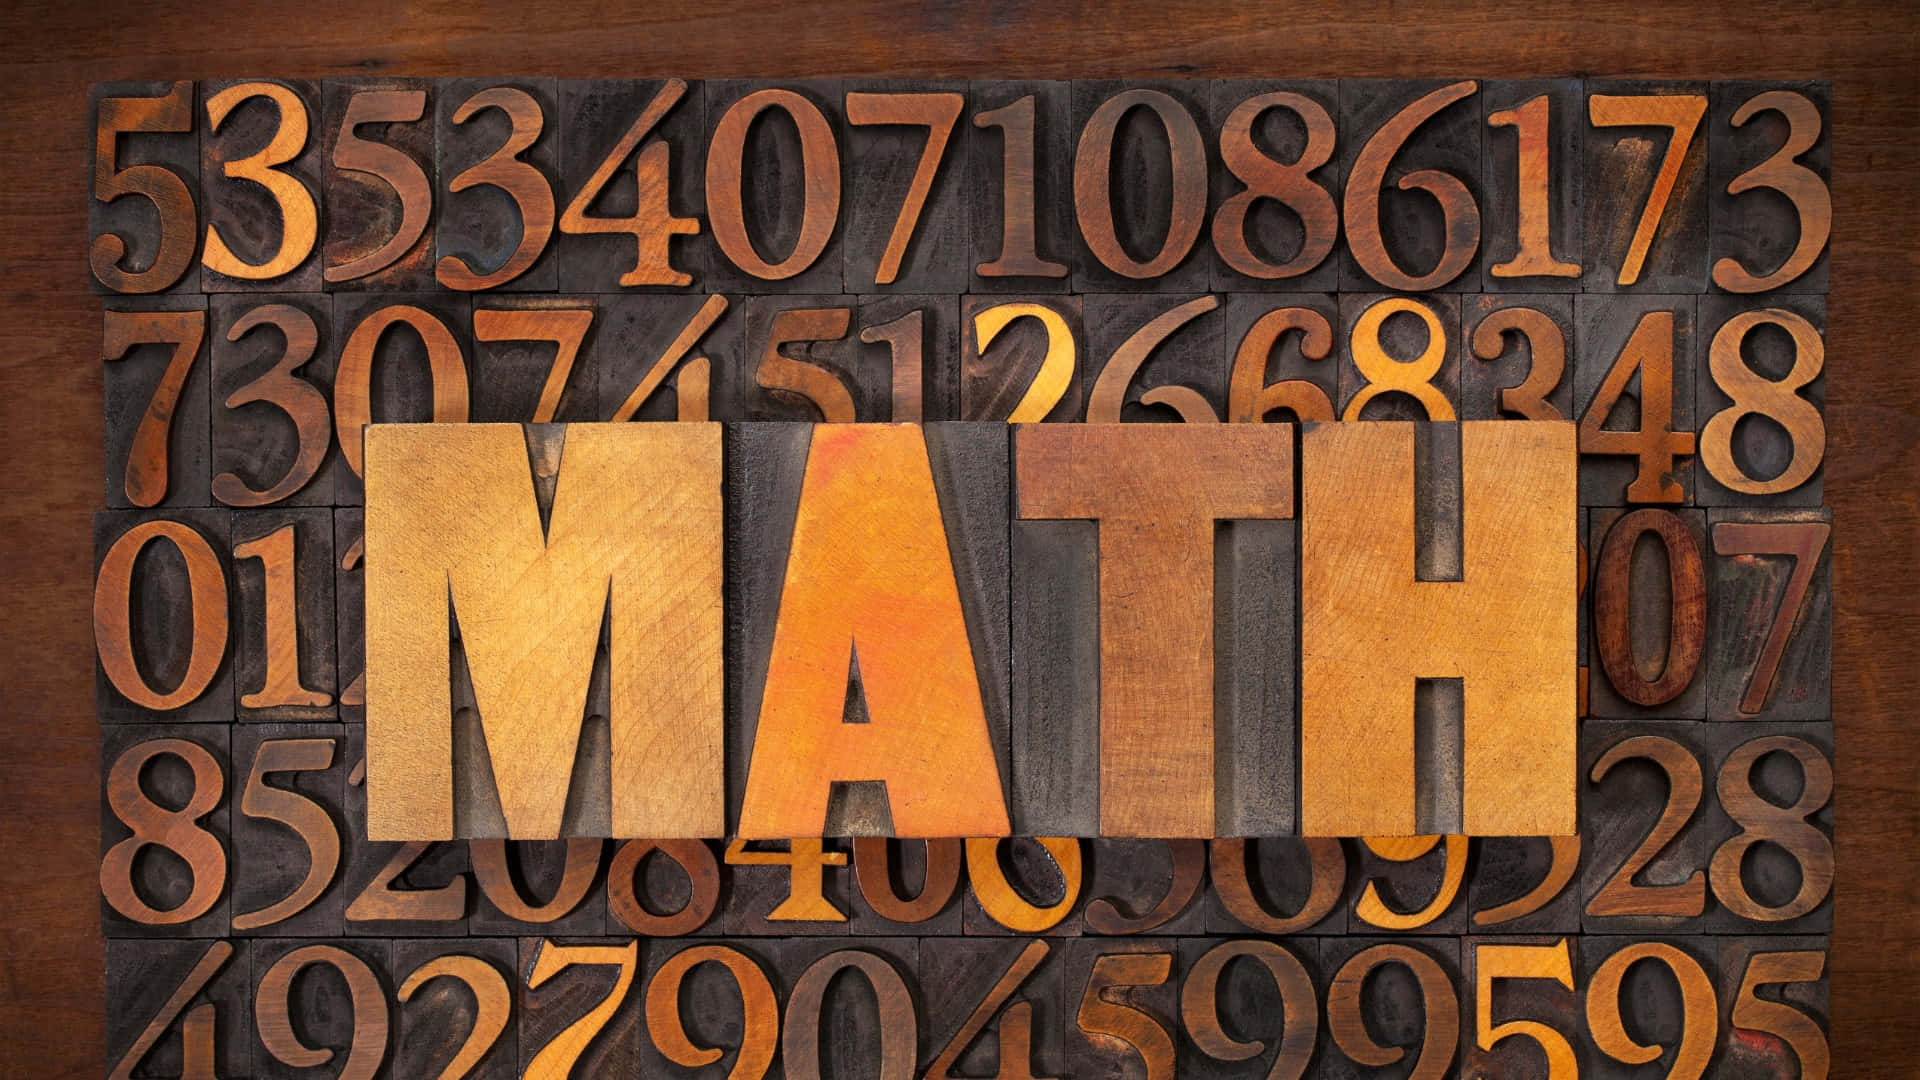 Aggregate 164+ mathematics math wallpaper latest